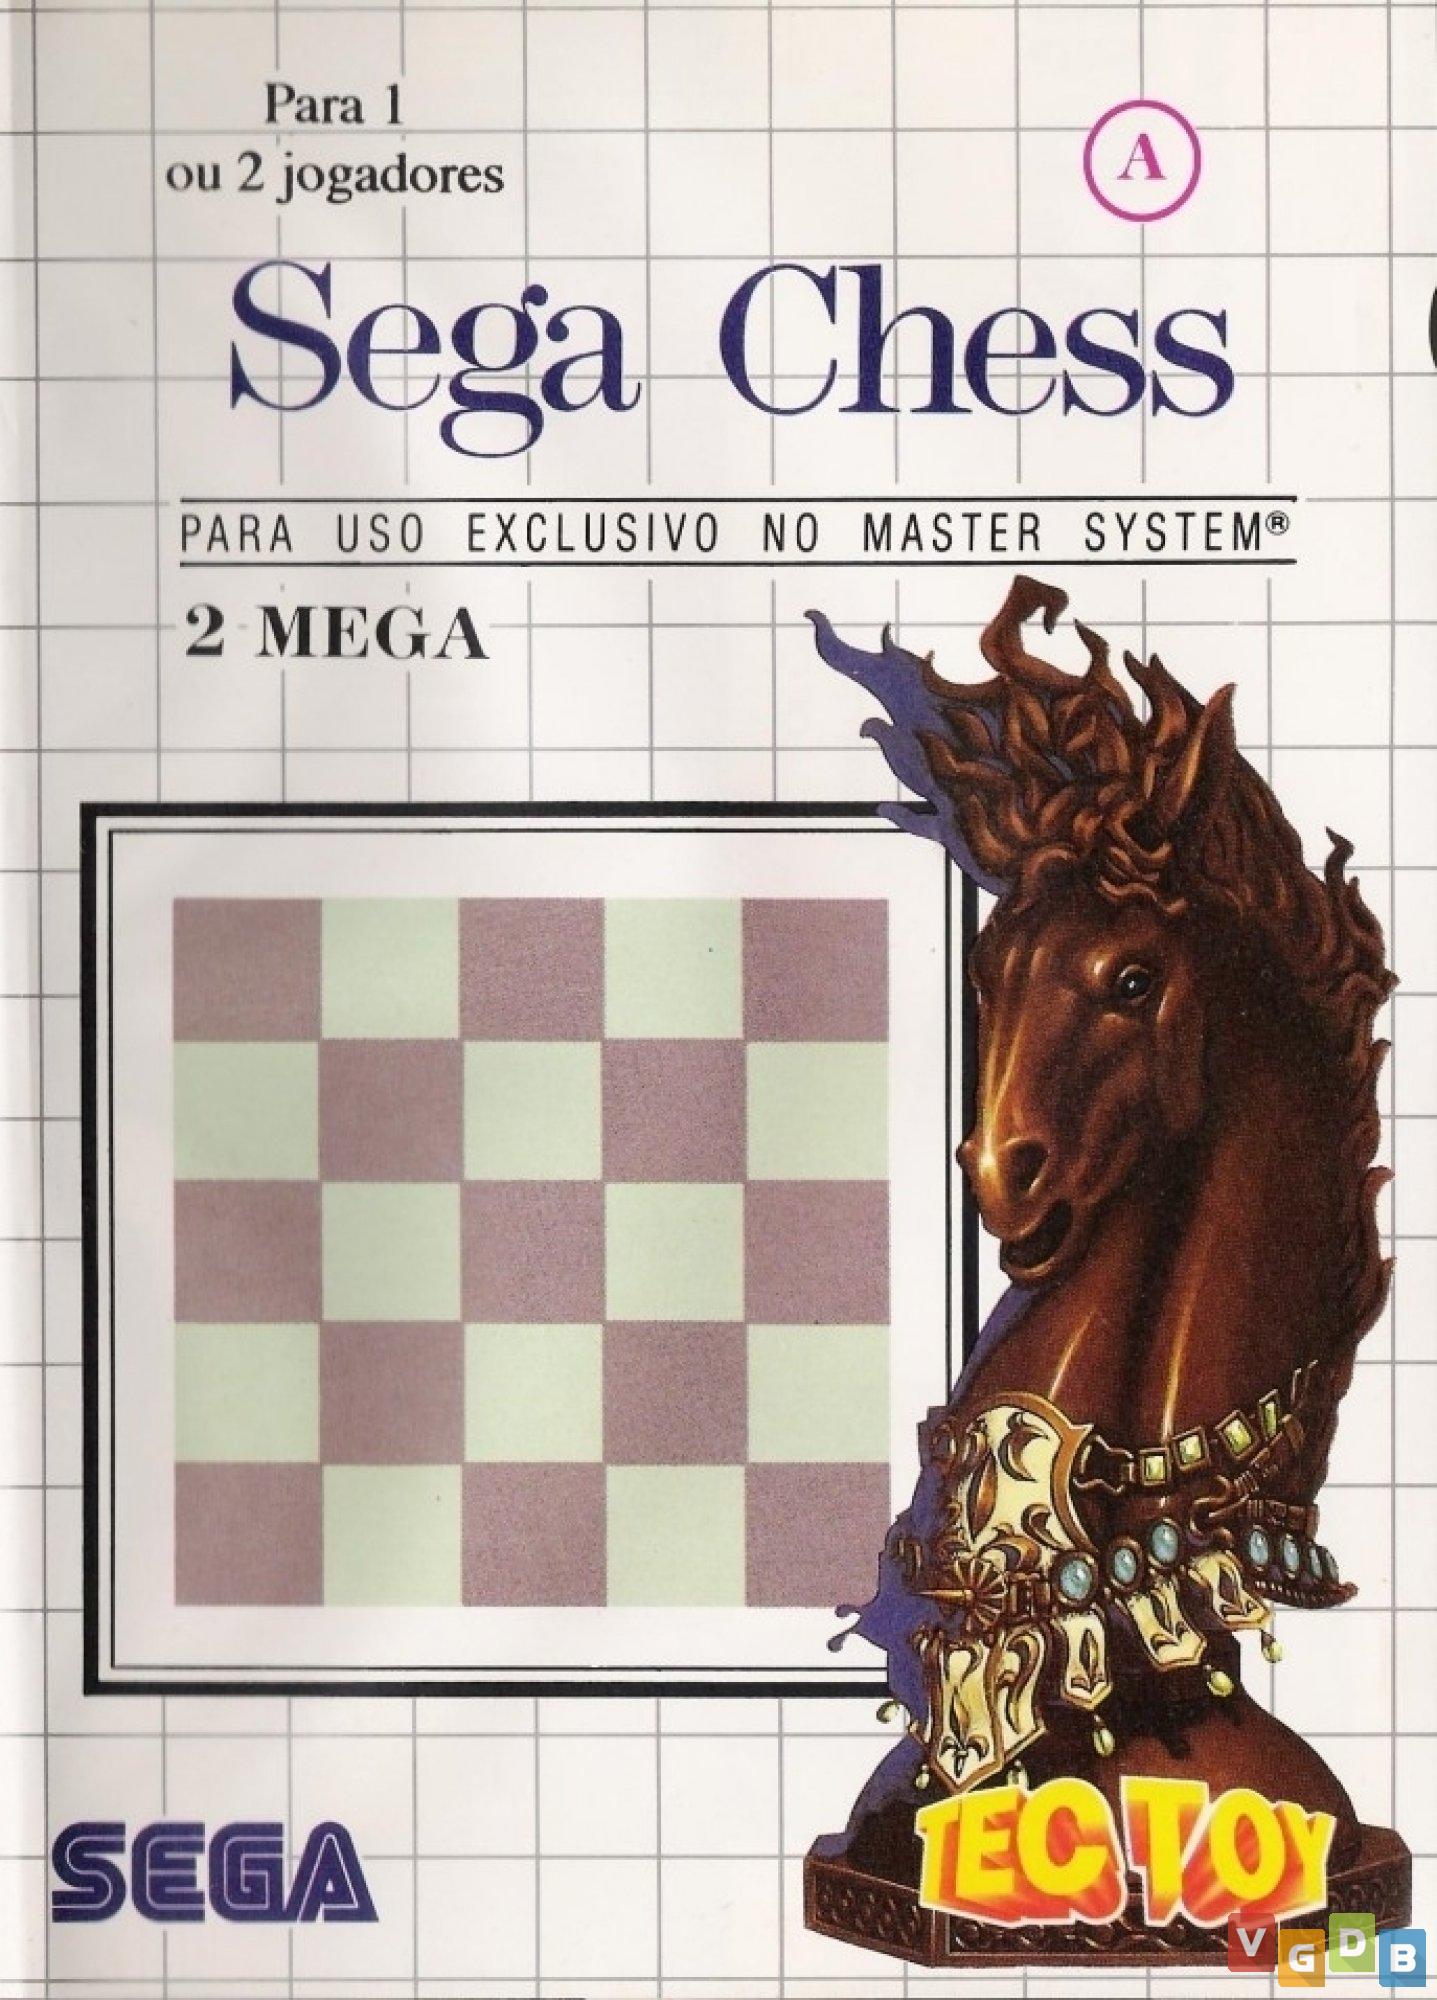 Sega Chess - VGDB - Vídeo Game Data Base